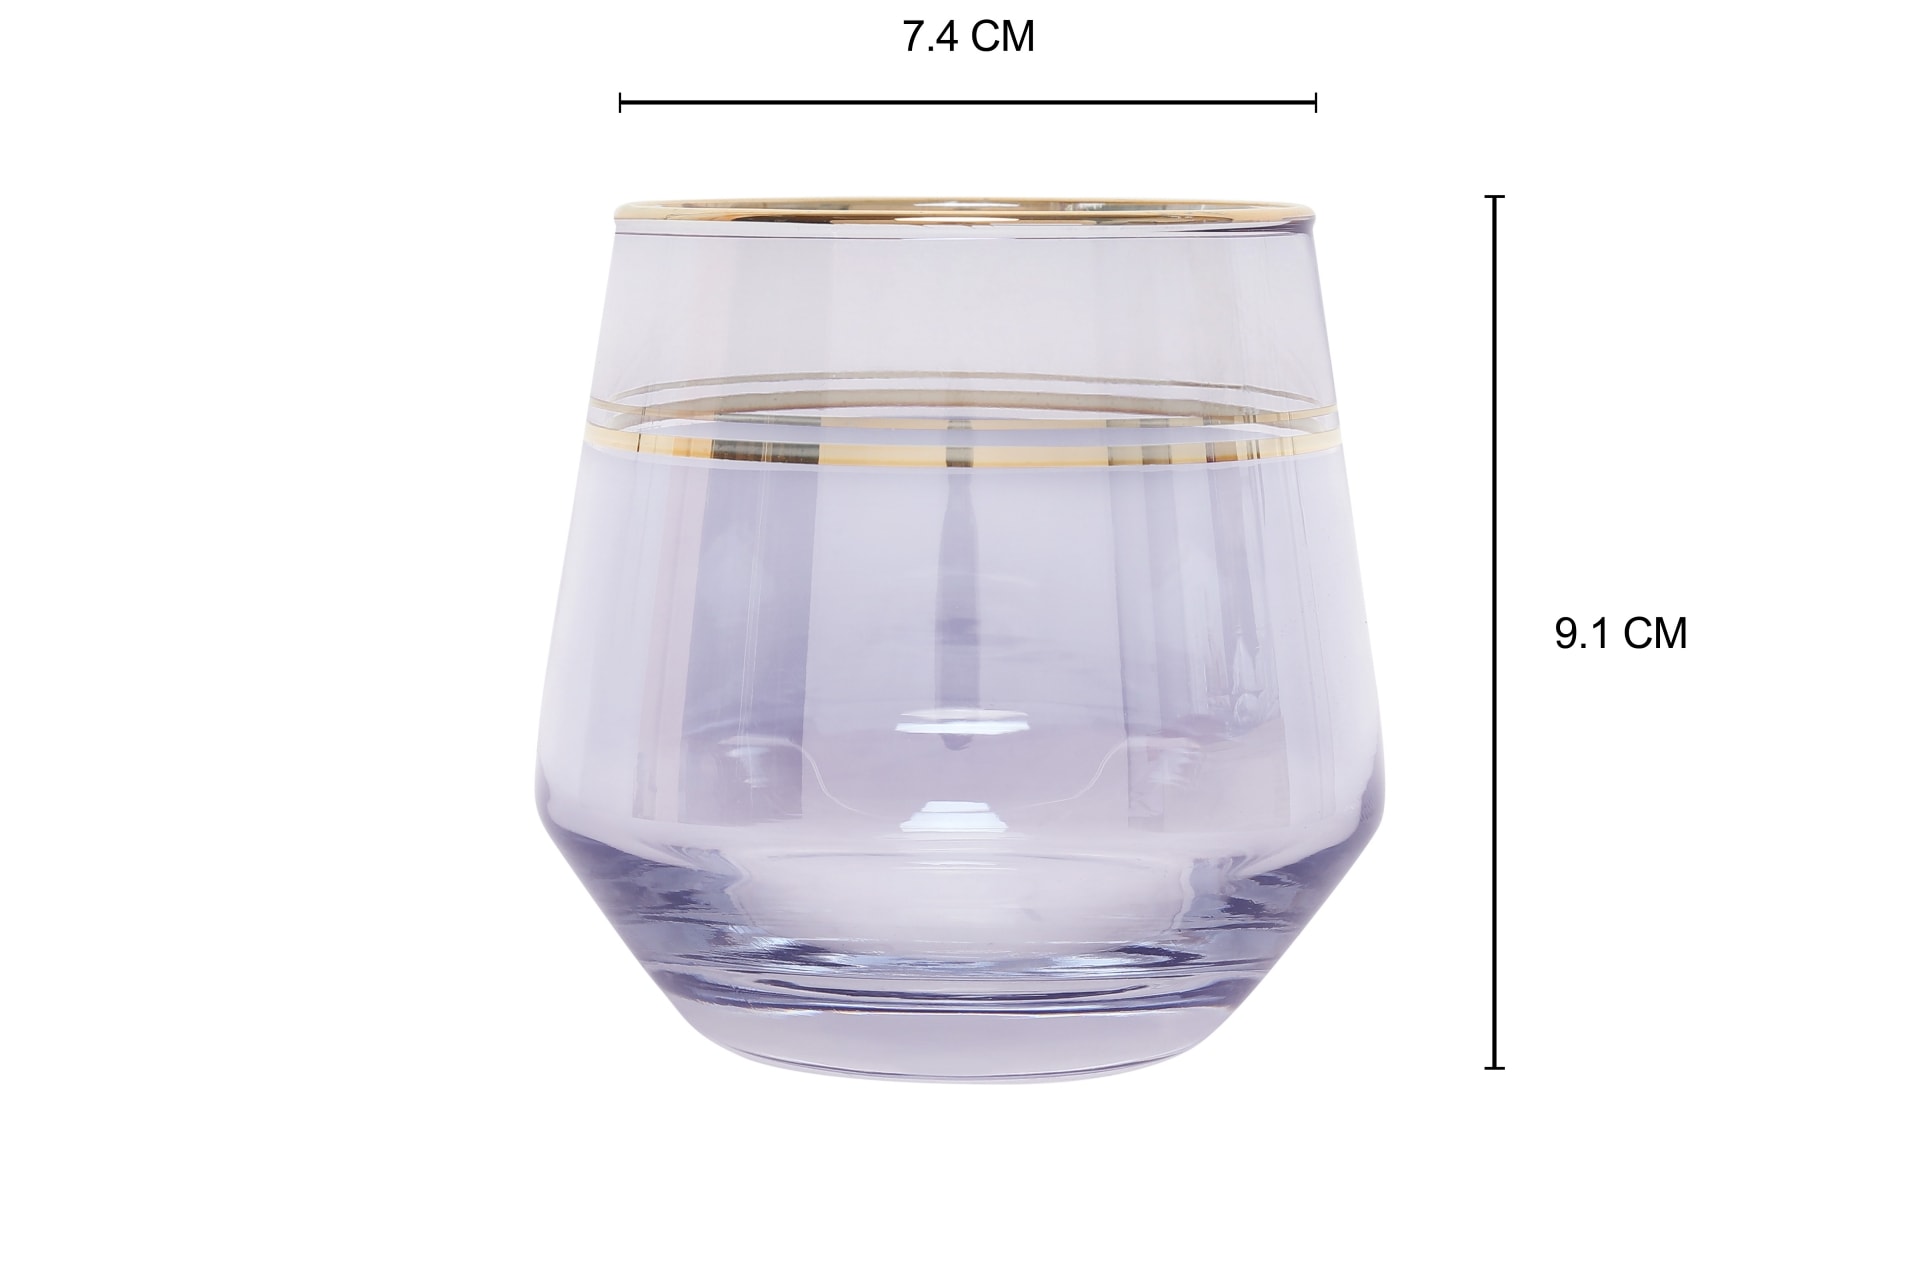 Viola Regal Drinking Glass